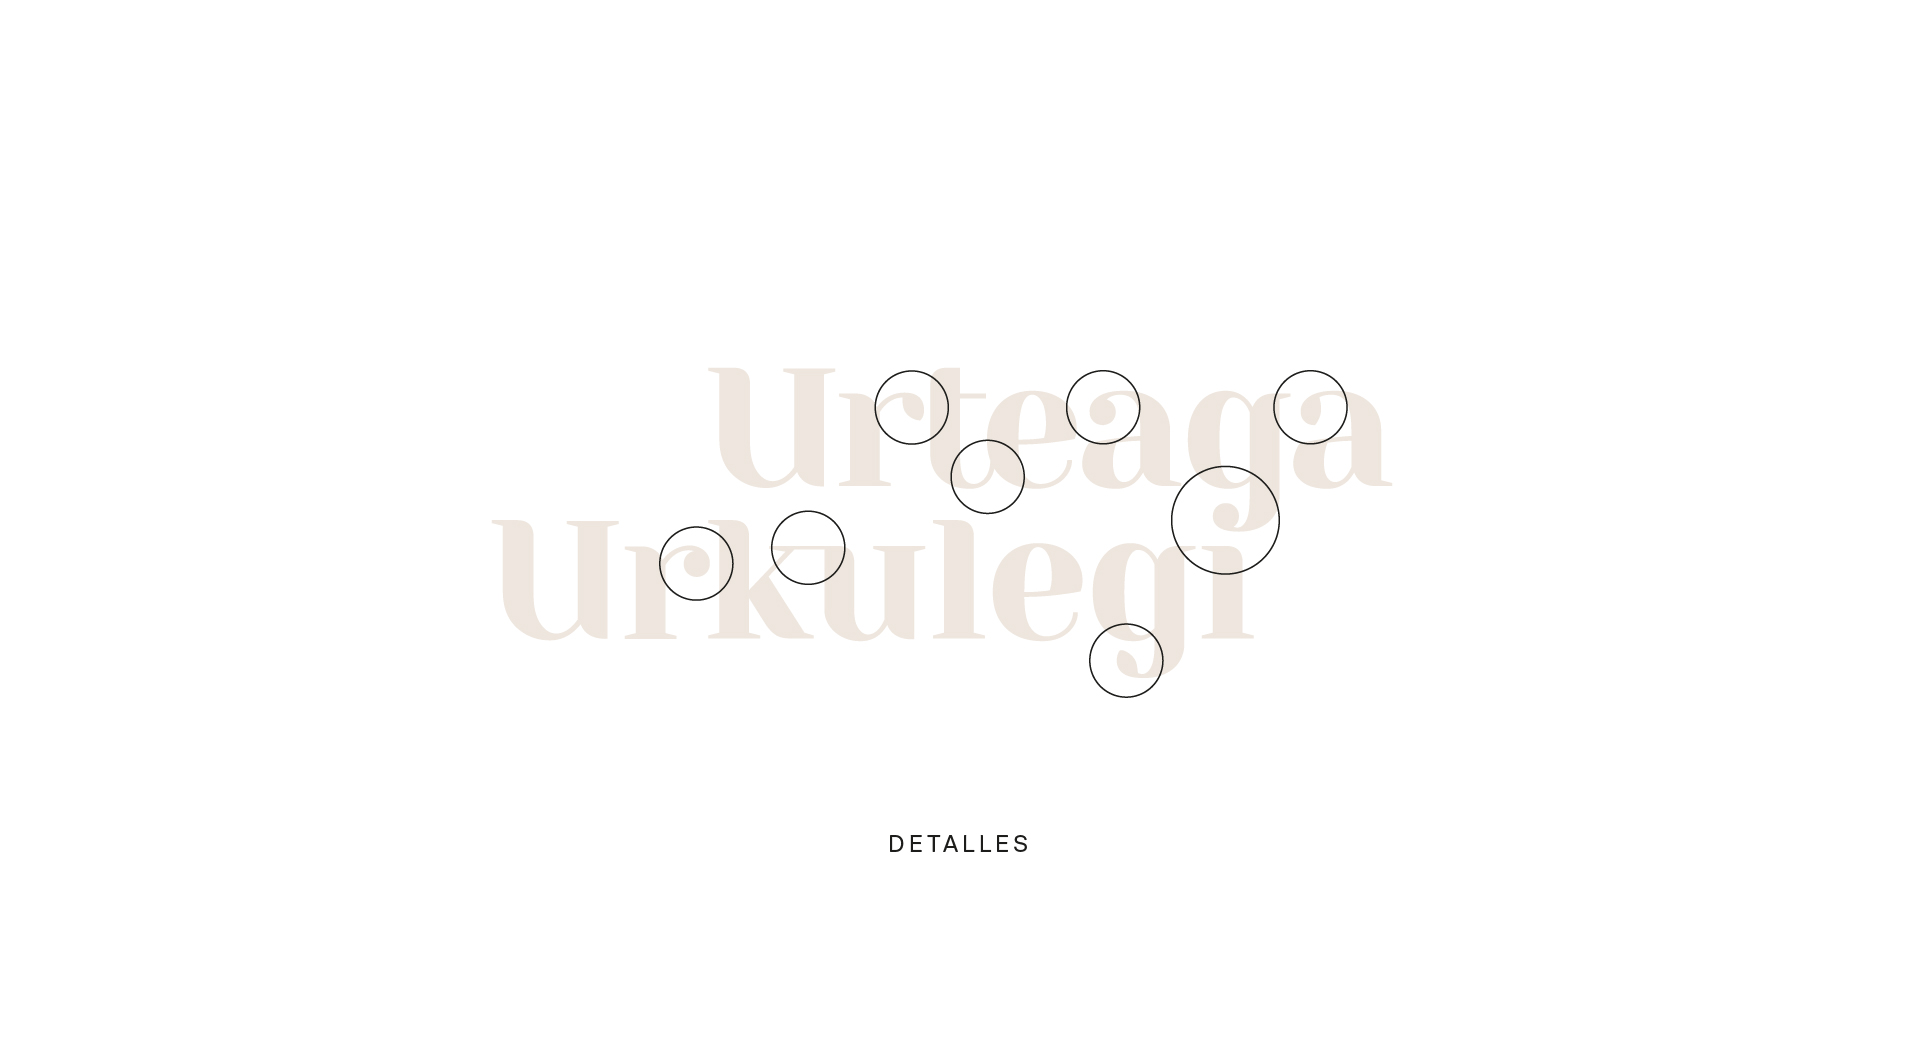 Detalles del logotipo Urteaga-Urkulegi